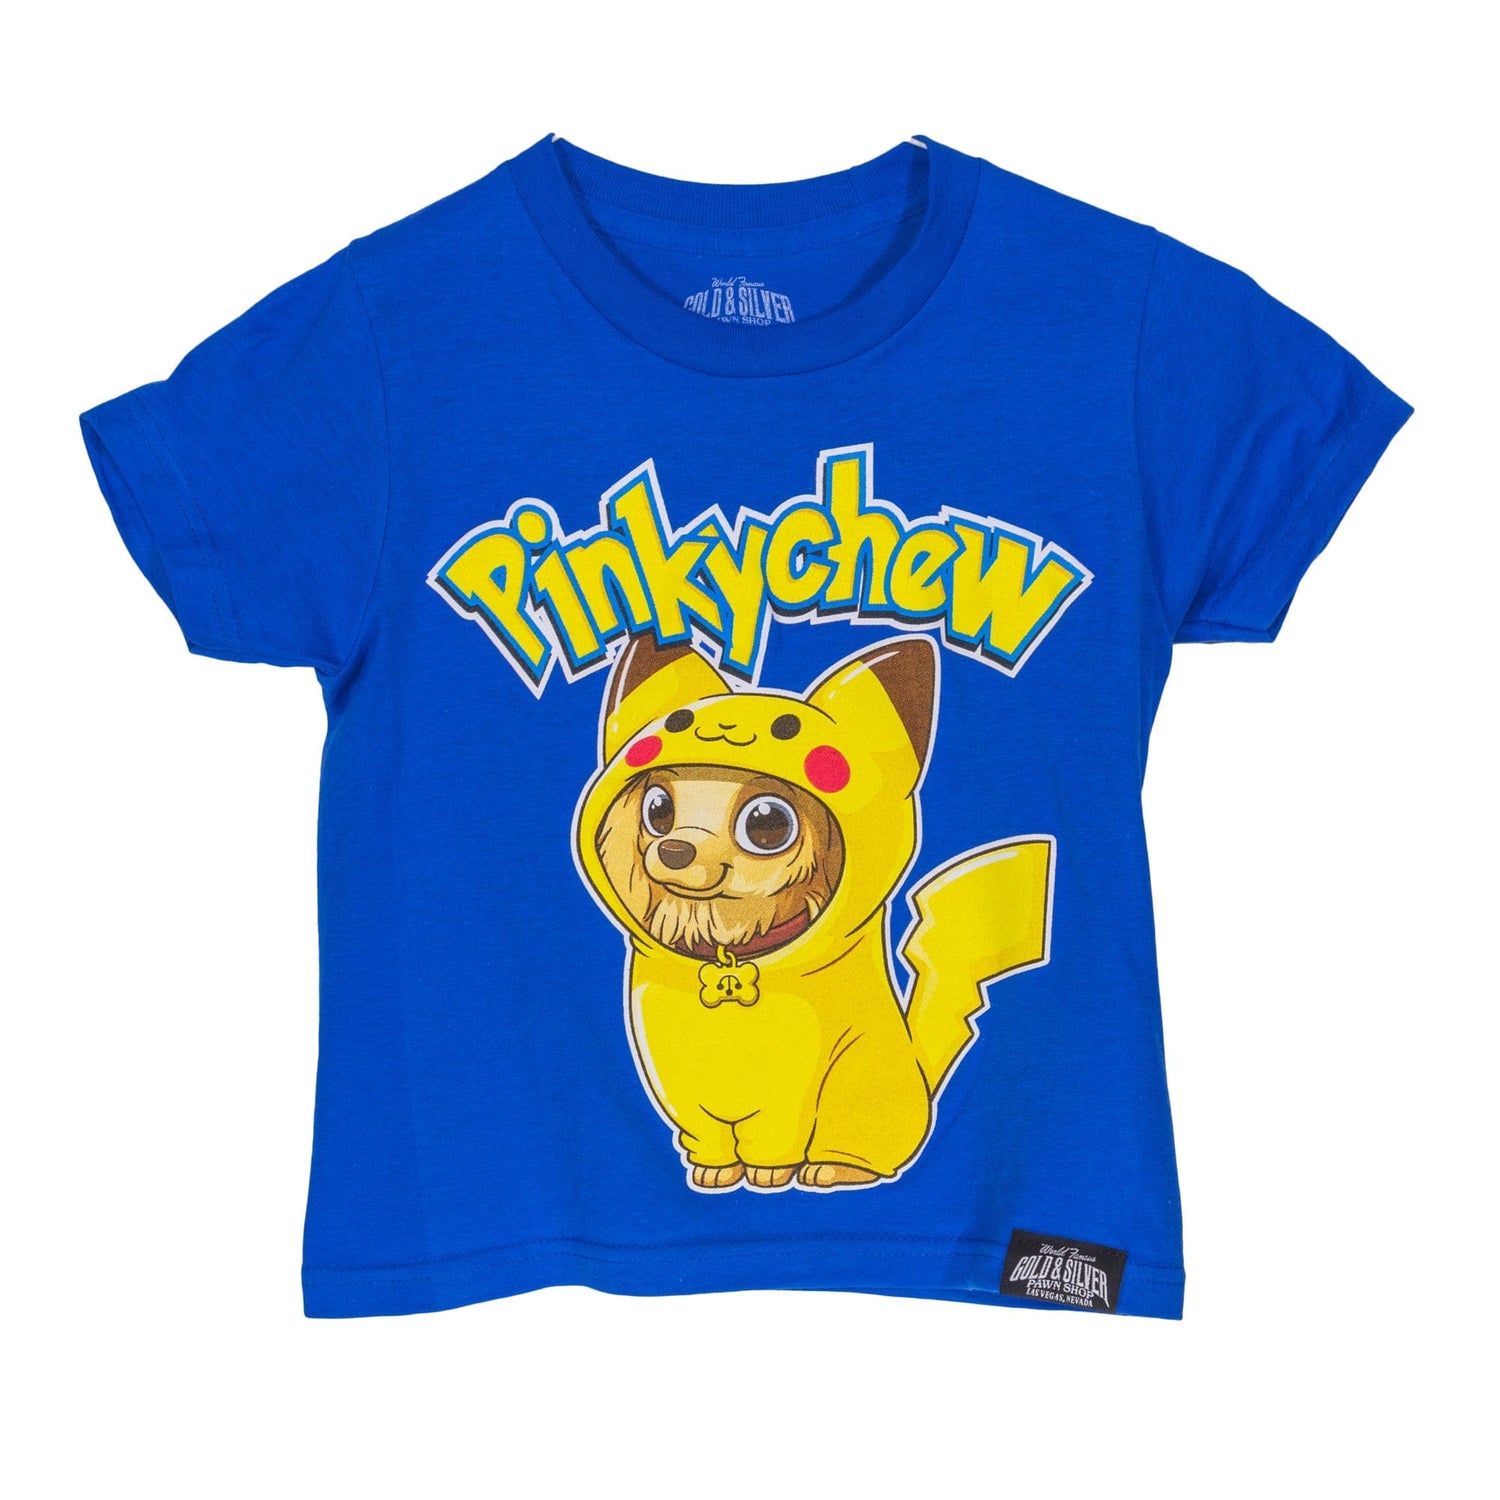 Kids "Pinkychew" T-Shirt Blue 